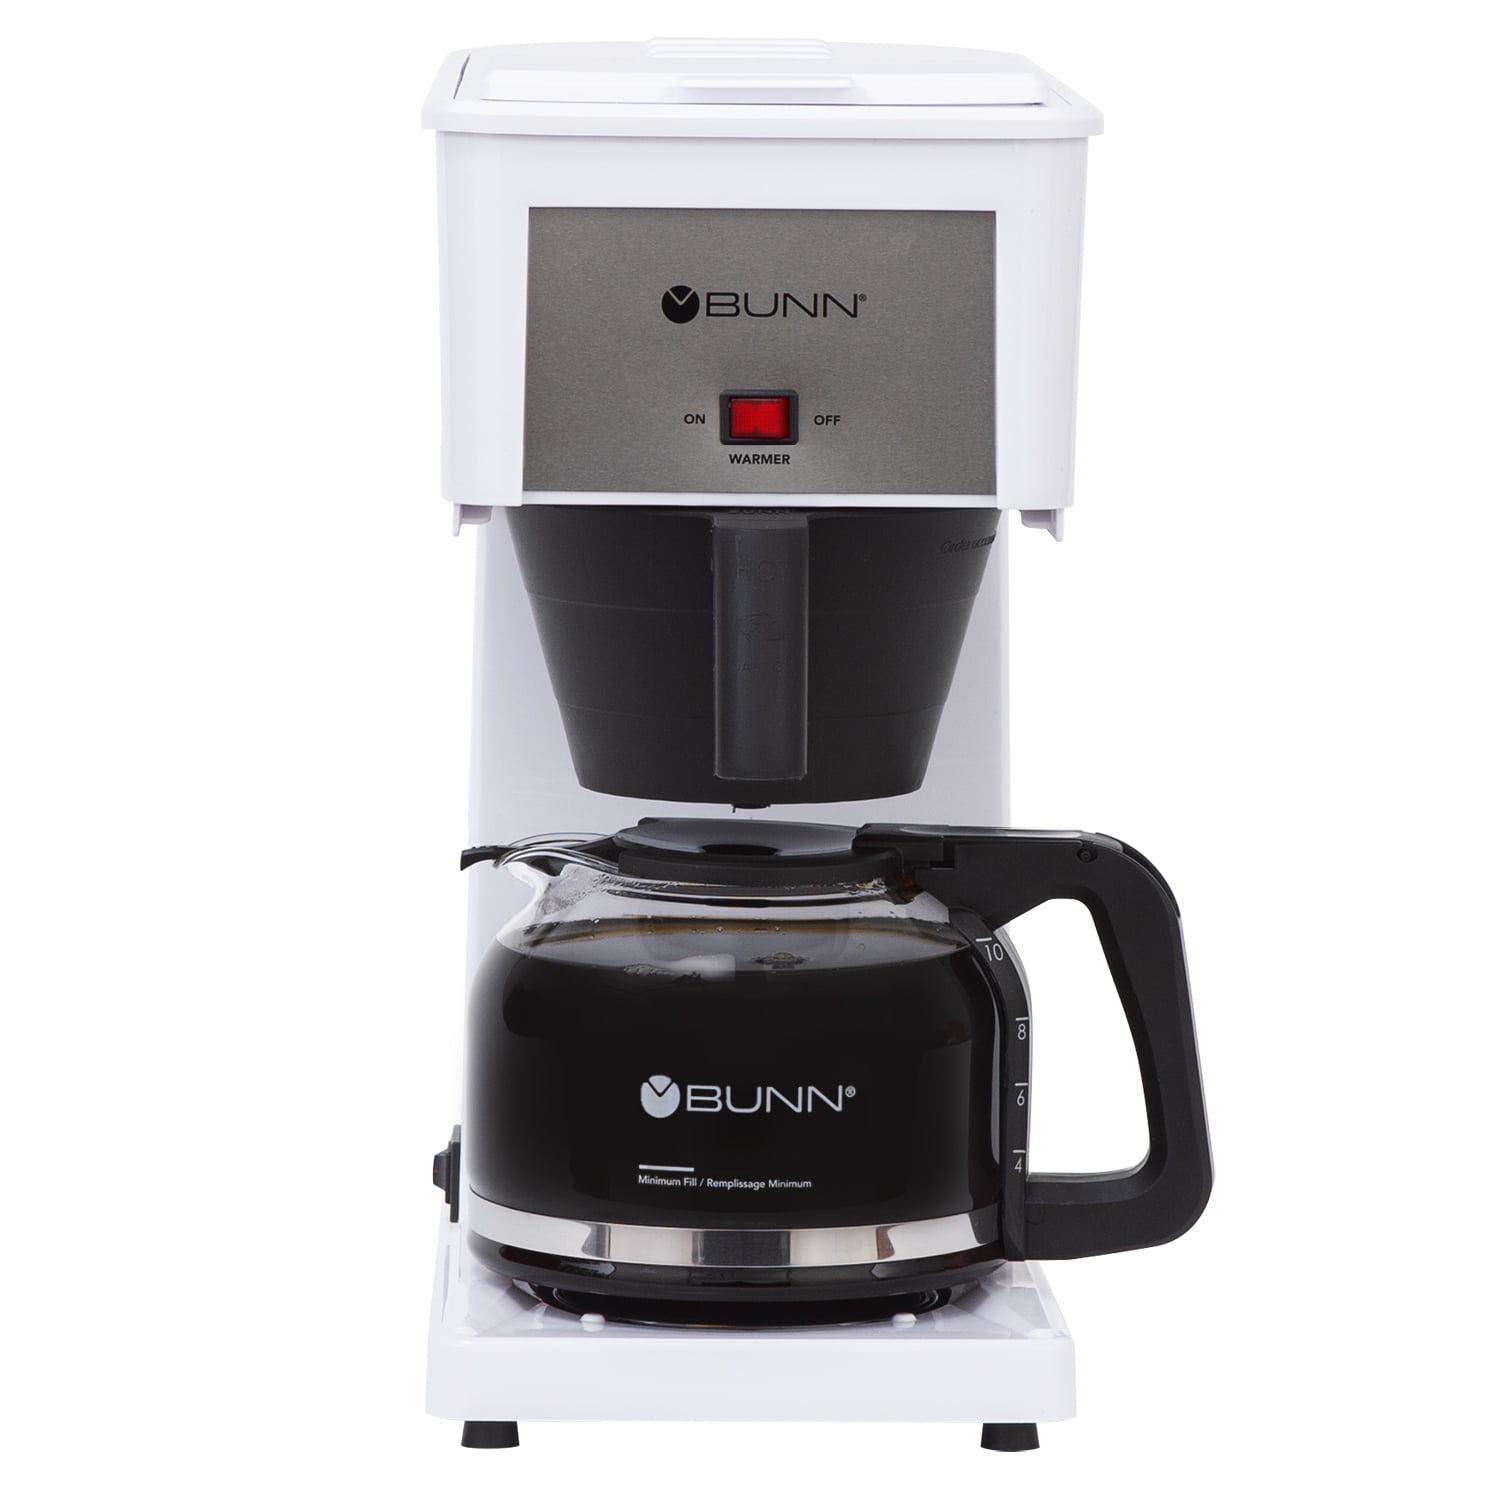 BUNN GRB Speed Brew Classic Coffee Maker 10 Cup 38300.0063 Black 